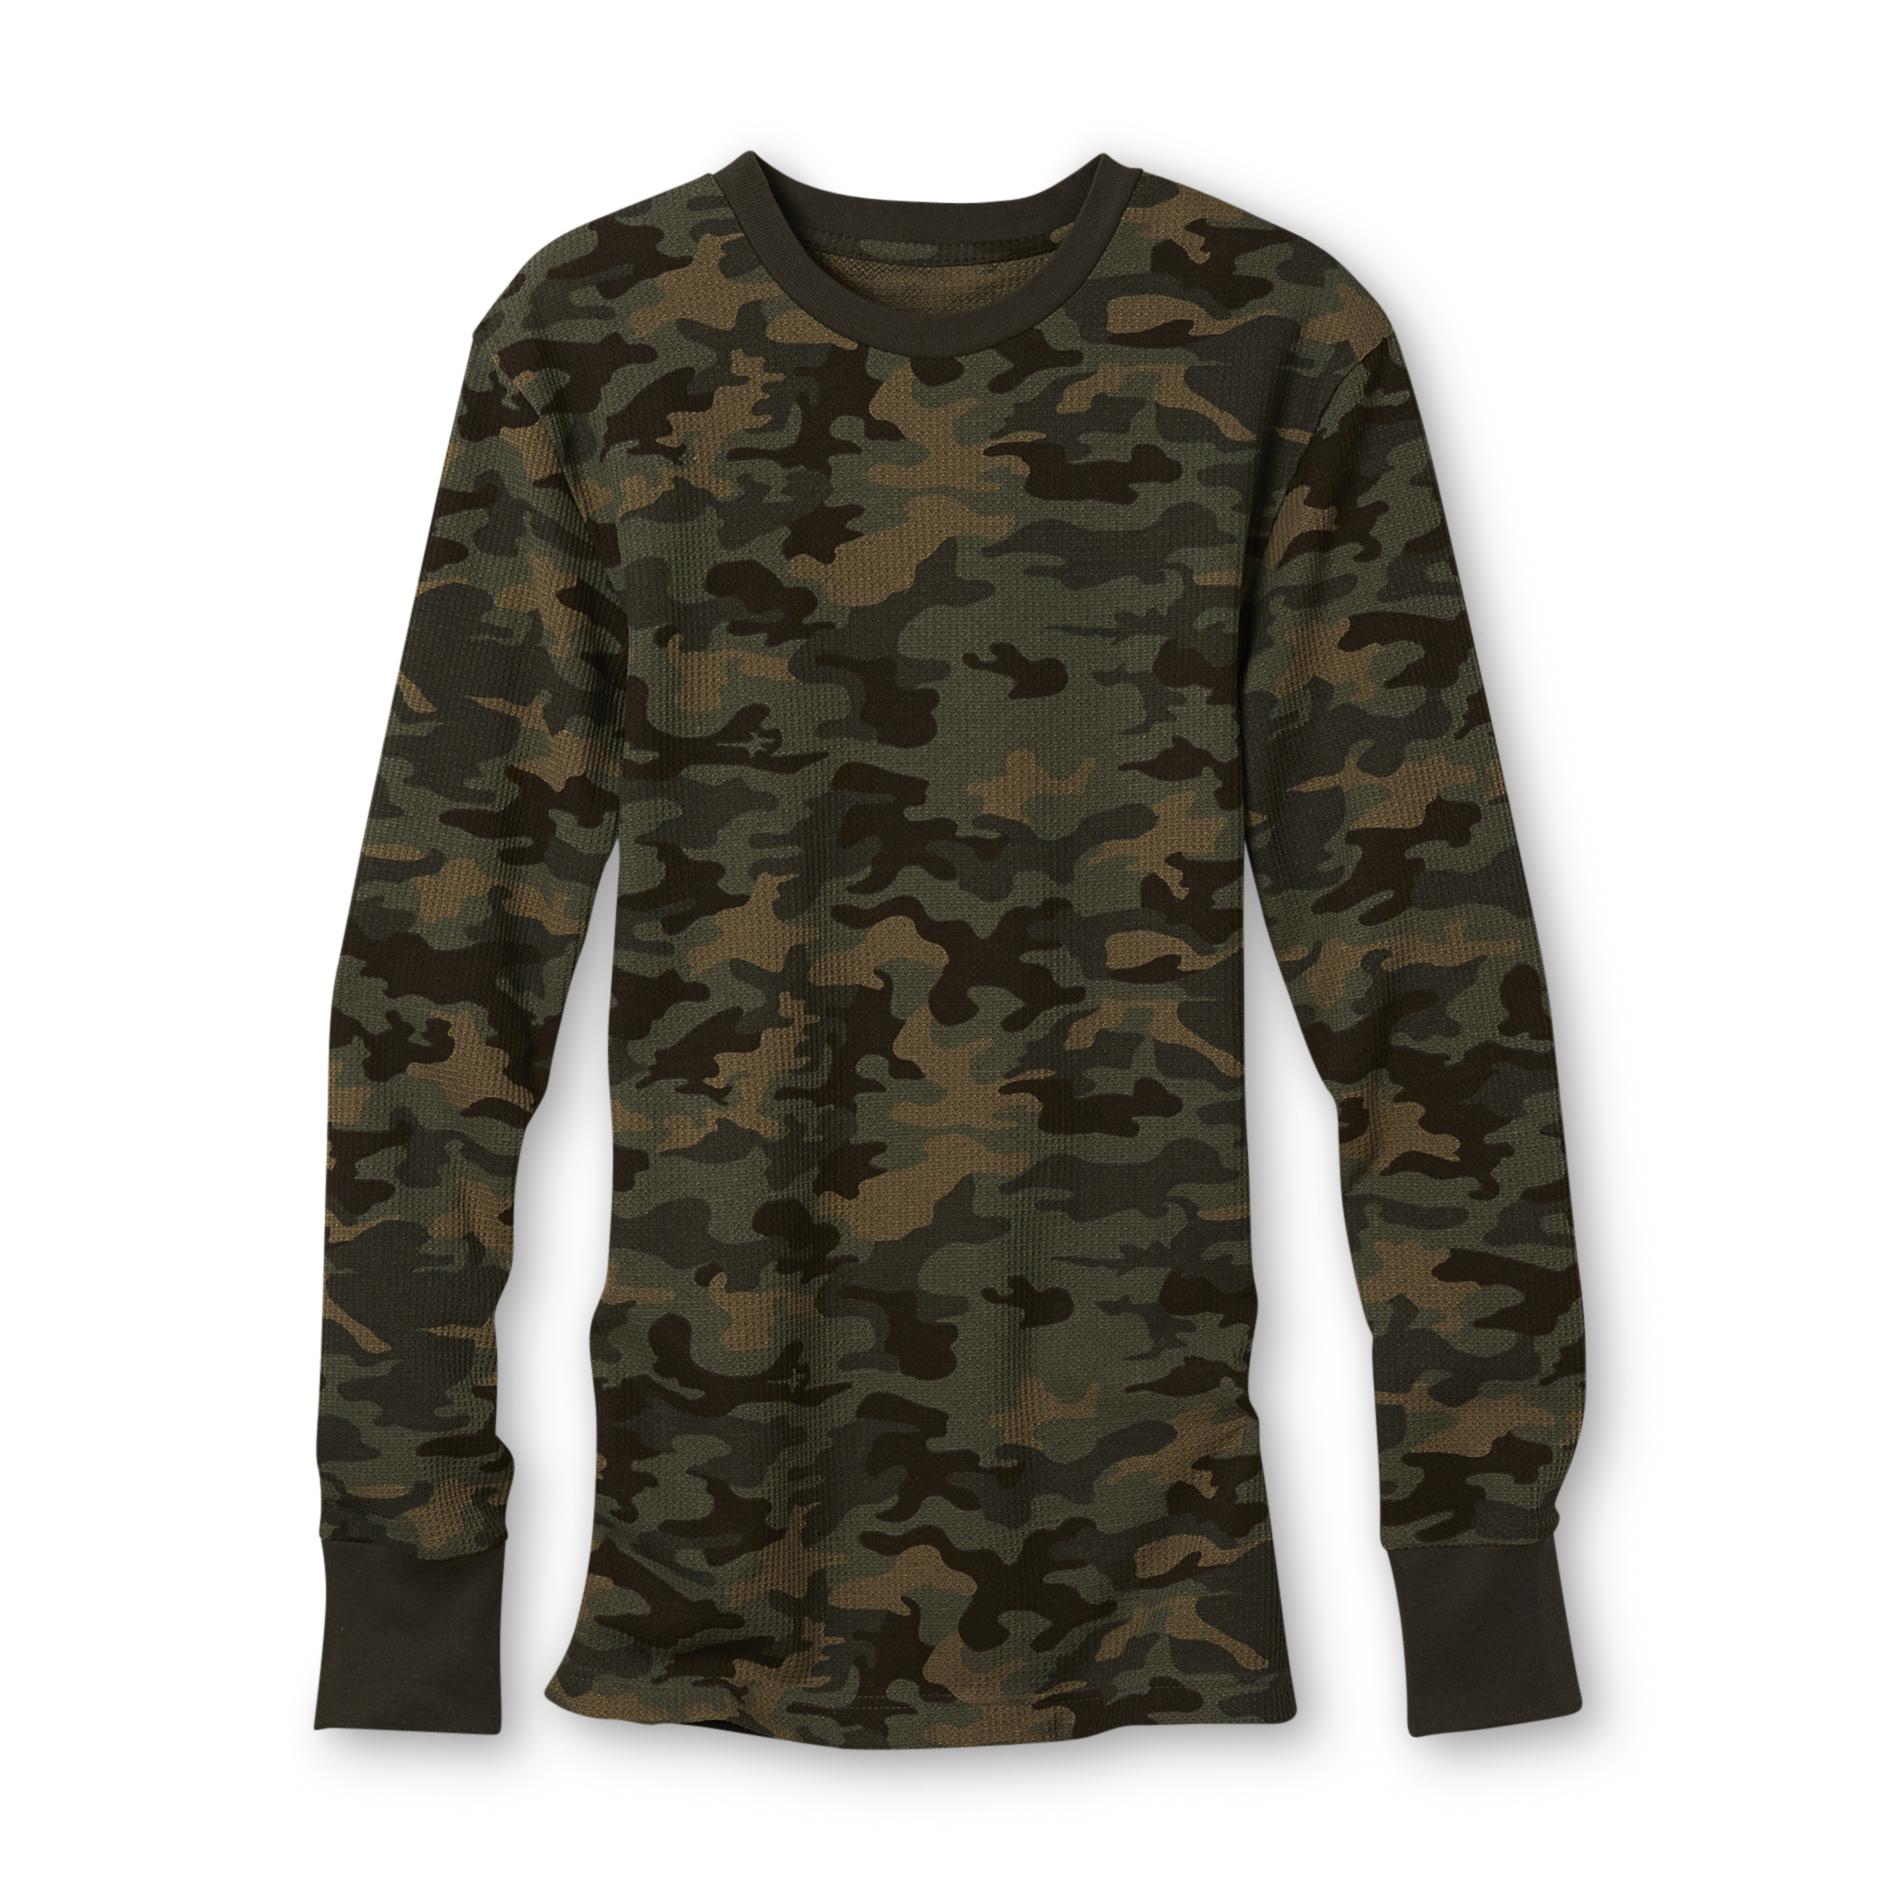 Joe Boxer Men's Thermal T-Shirt - Camouflage